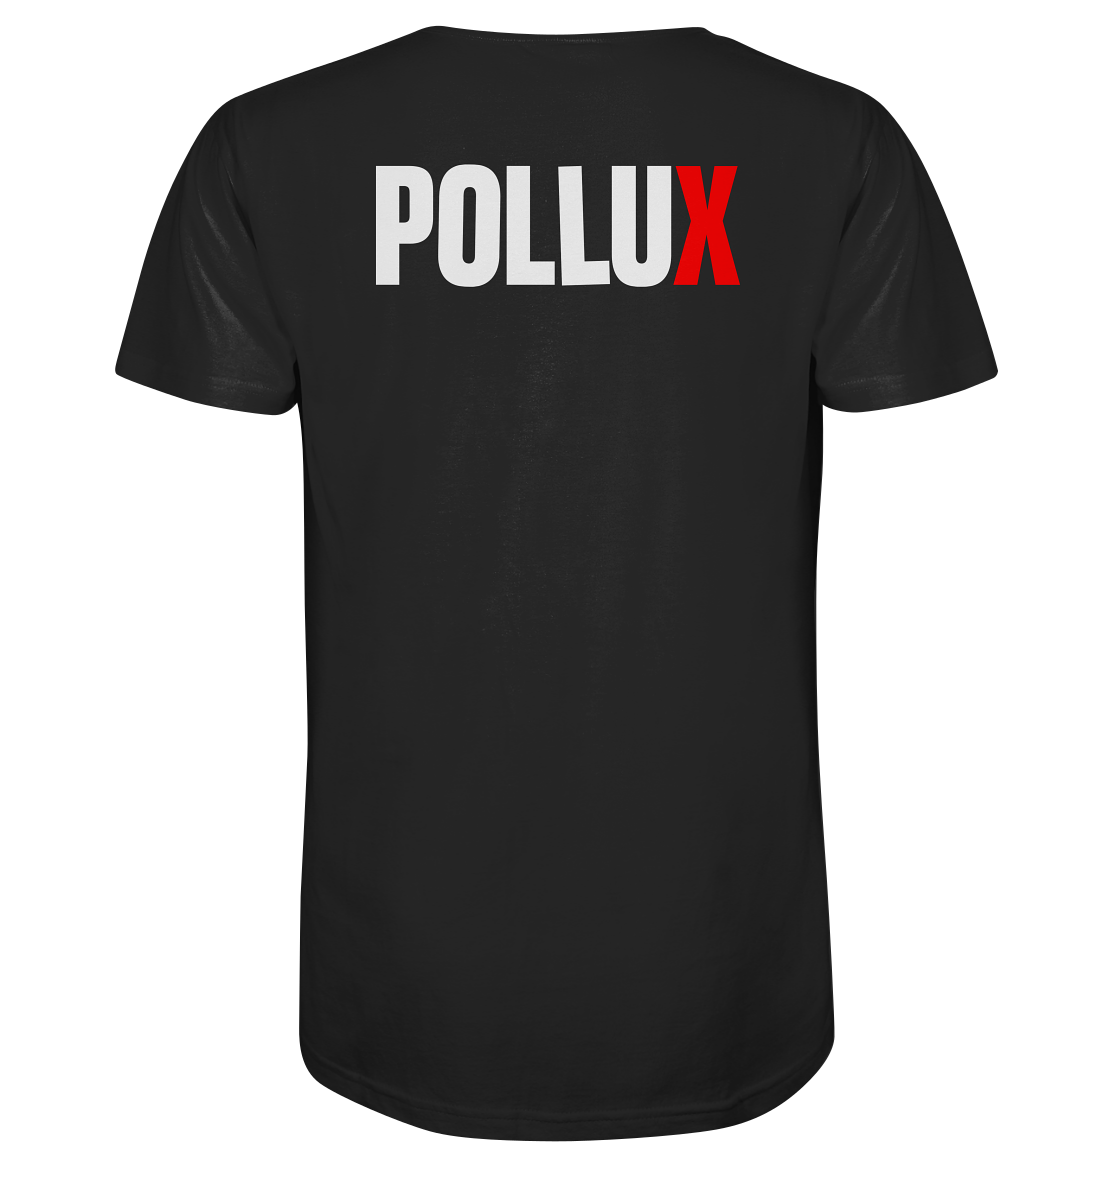 POLLUX - Organic Shirt